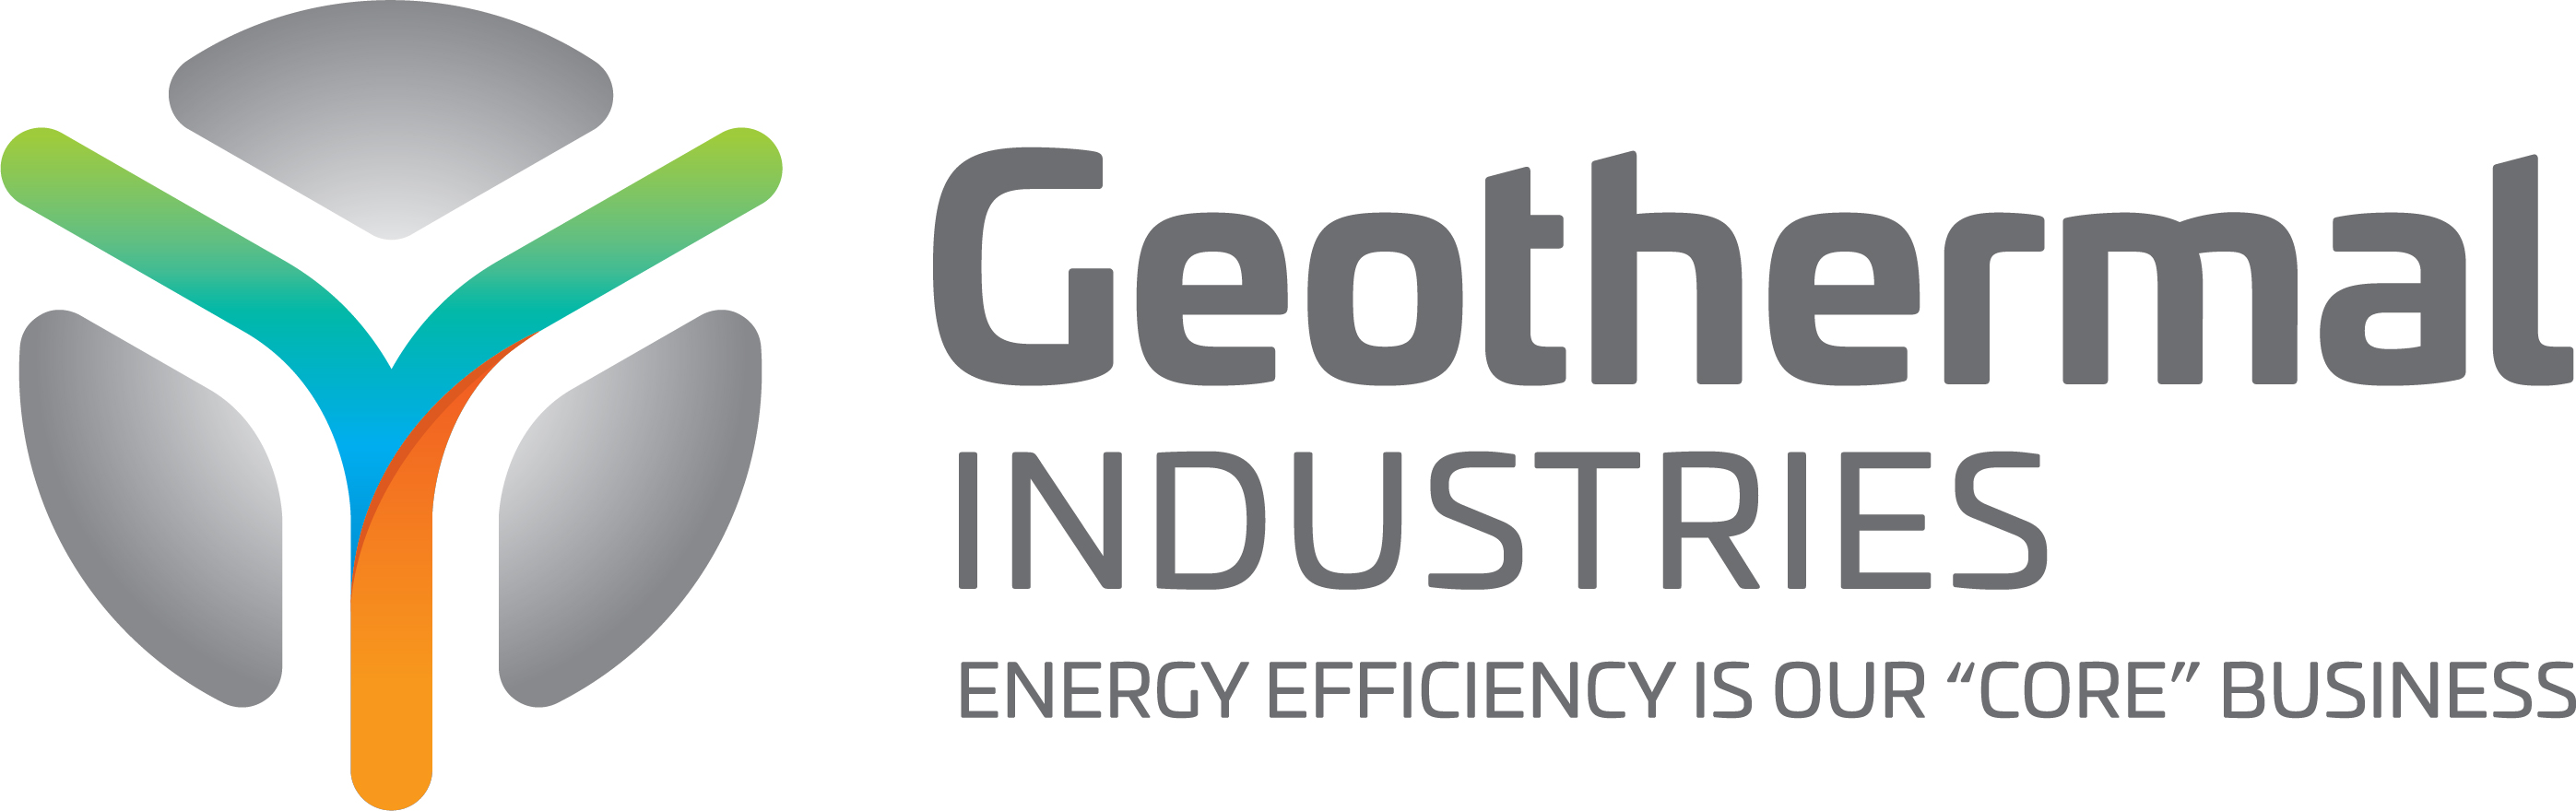 Geothermal_Industries_LOGO_TAGLINE_COLOUR